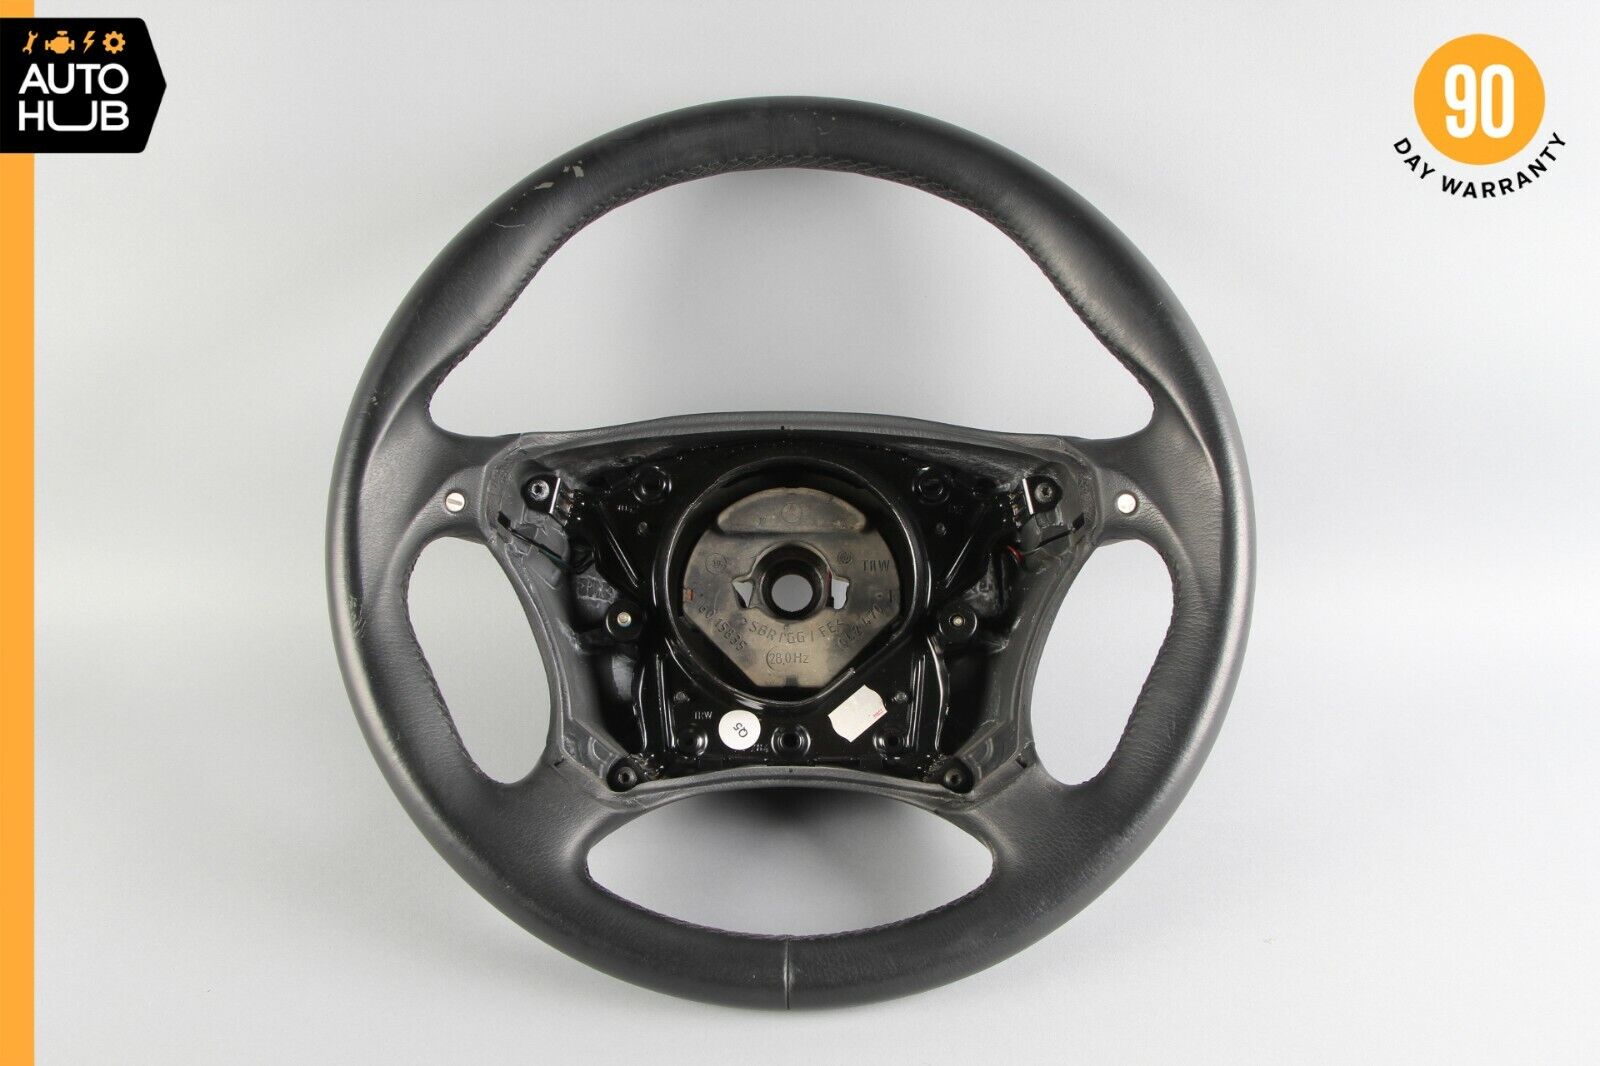 03-06 Mercedes W220 S55 CL55 AMG Sport Steering Wheel w/ Paddle Shifters Black